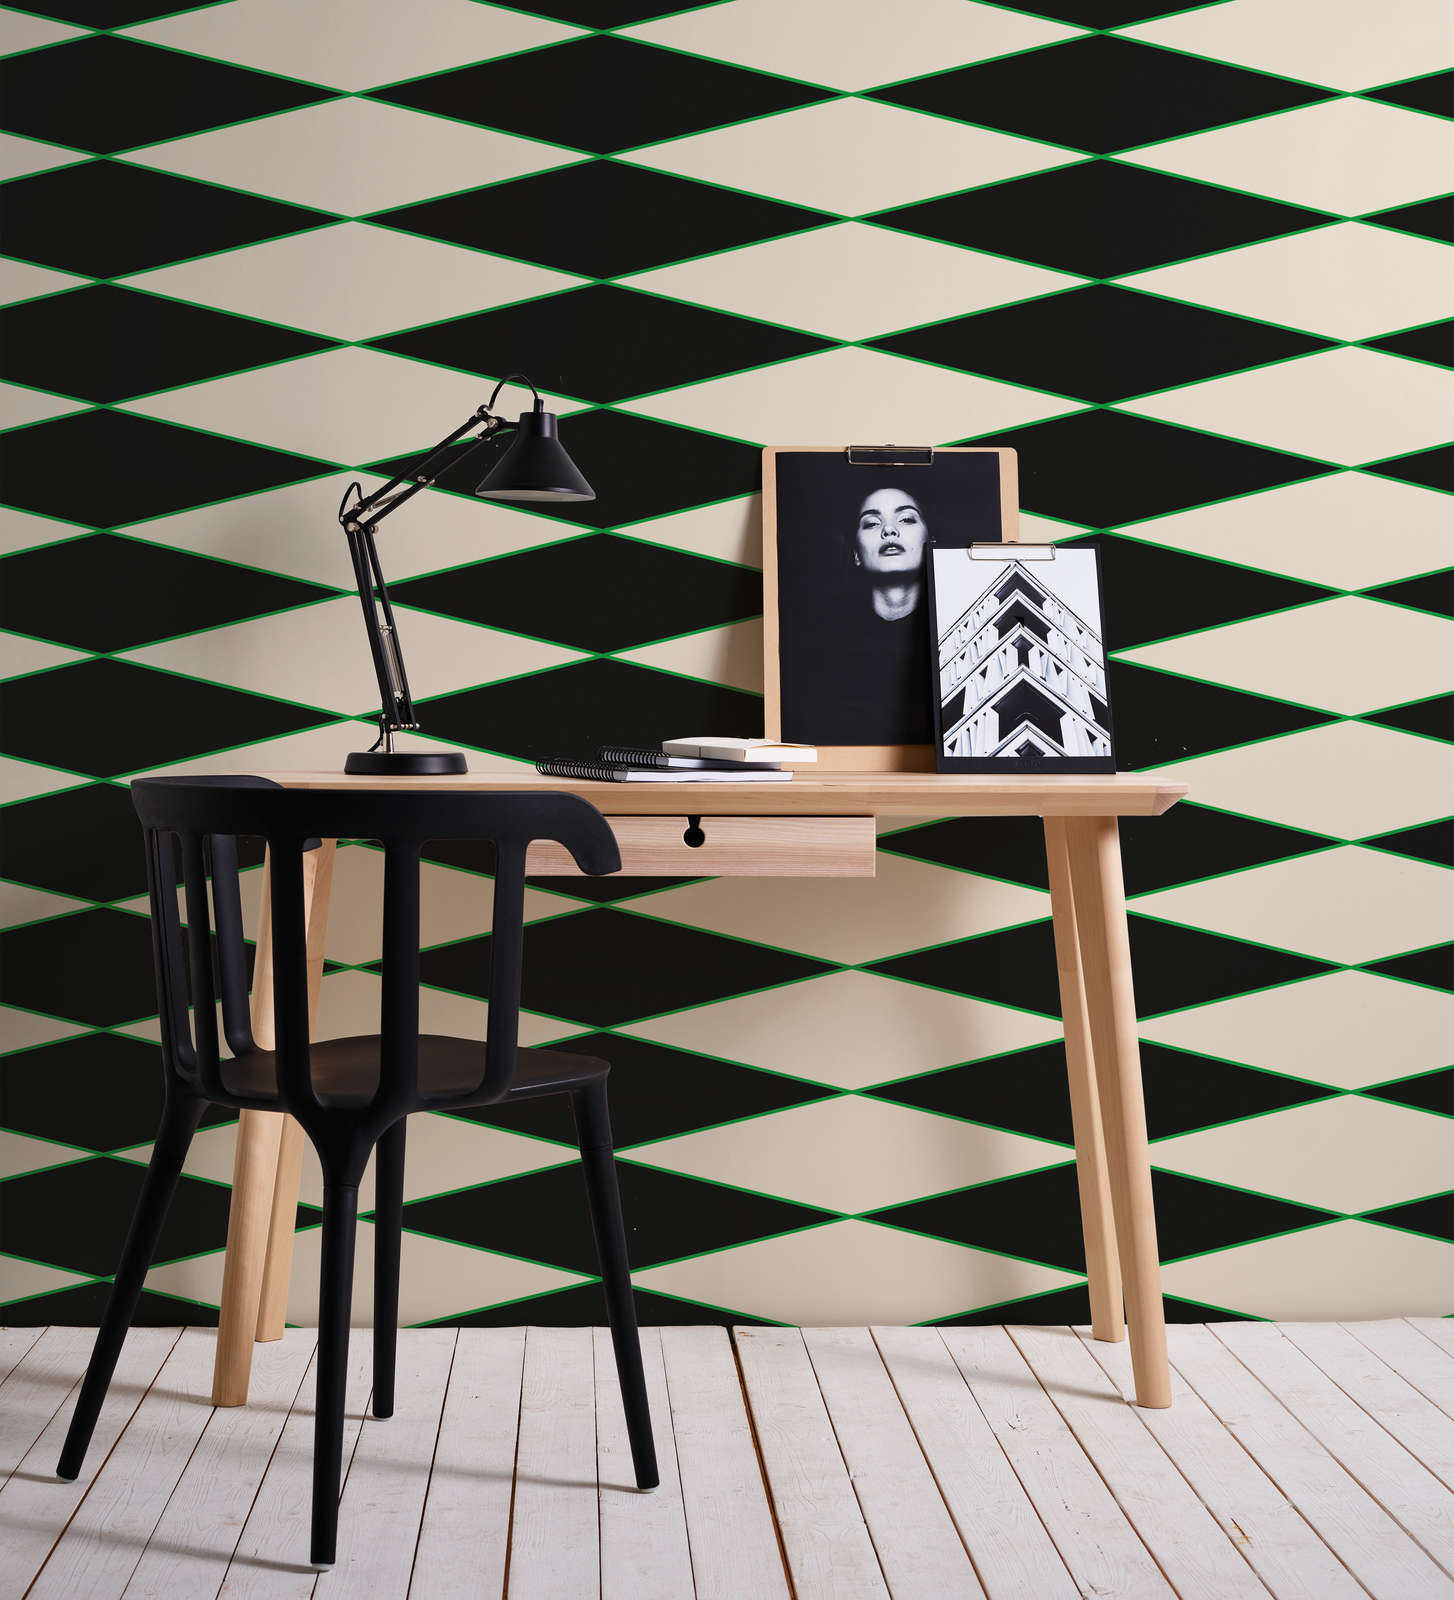             Graphic Wallpaper with Diamonds & Line Patterns - Black, Cream, Green | Matt Smooth Non-woven
        